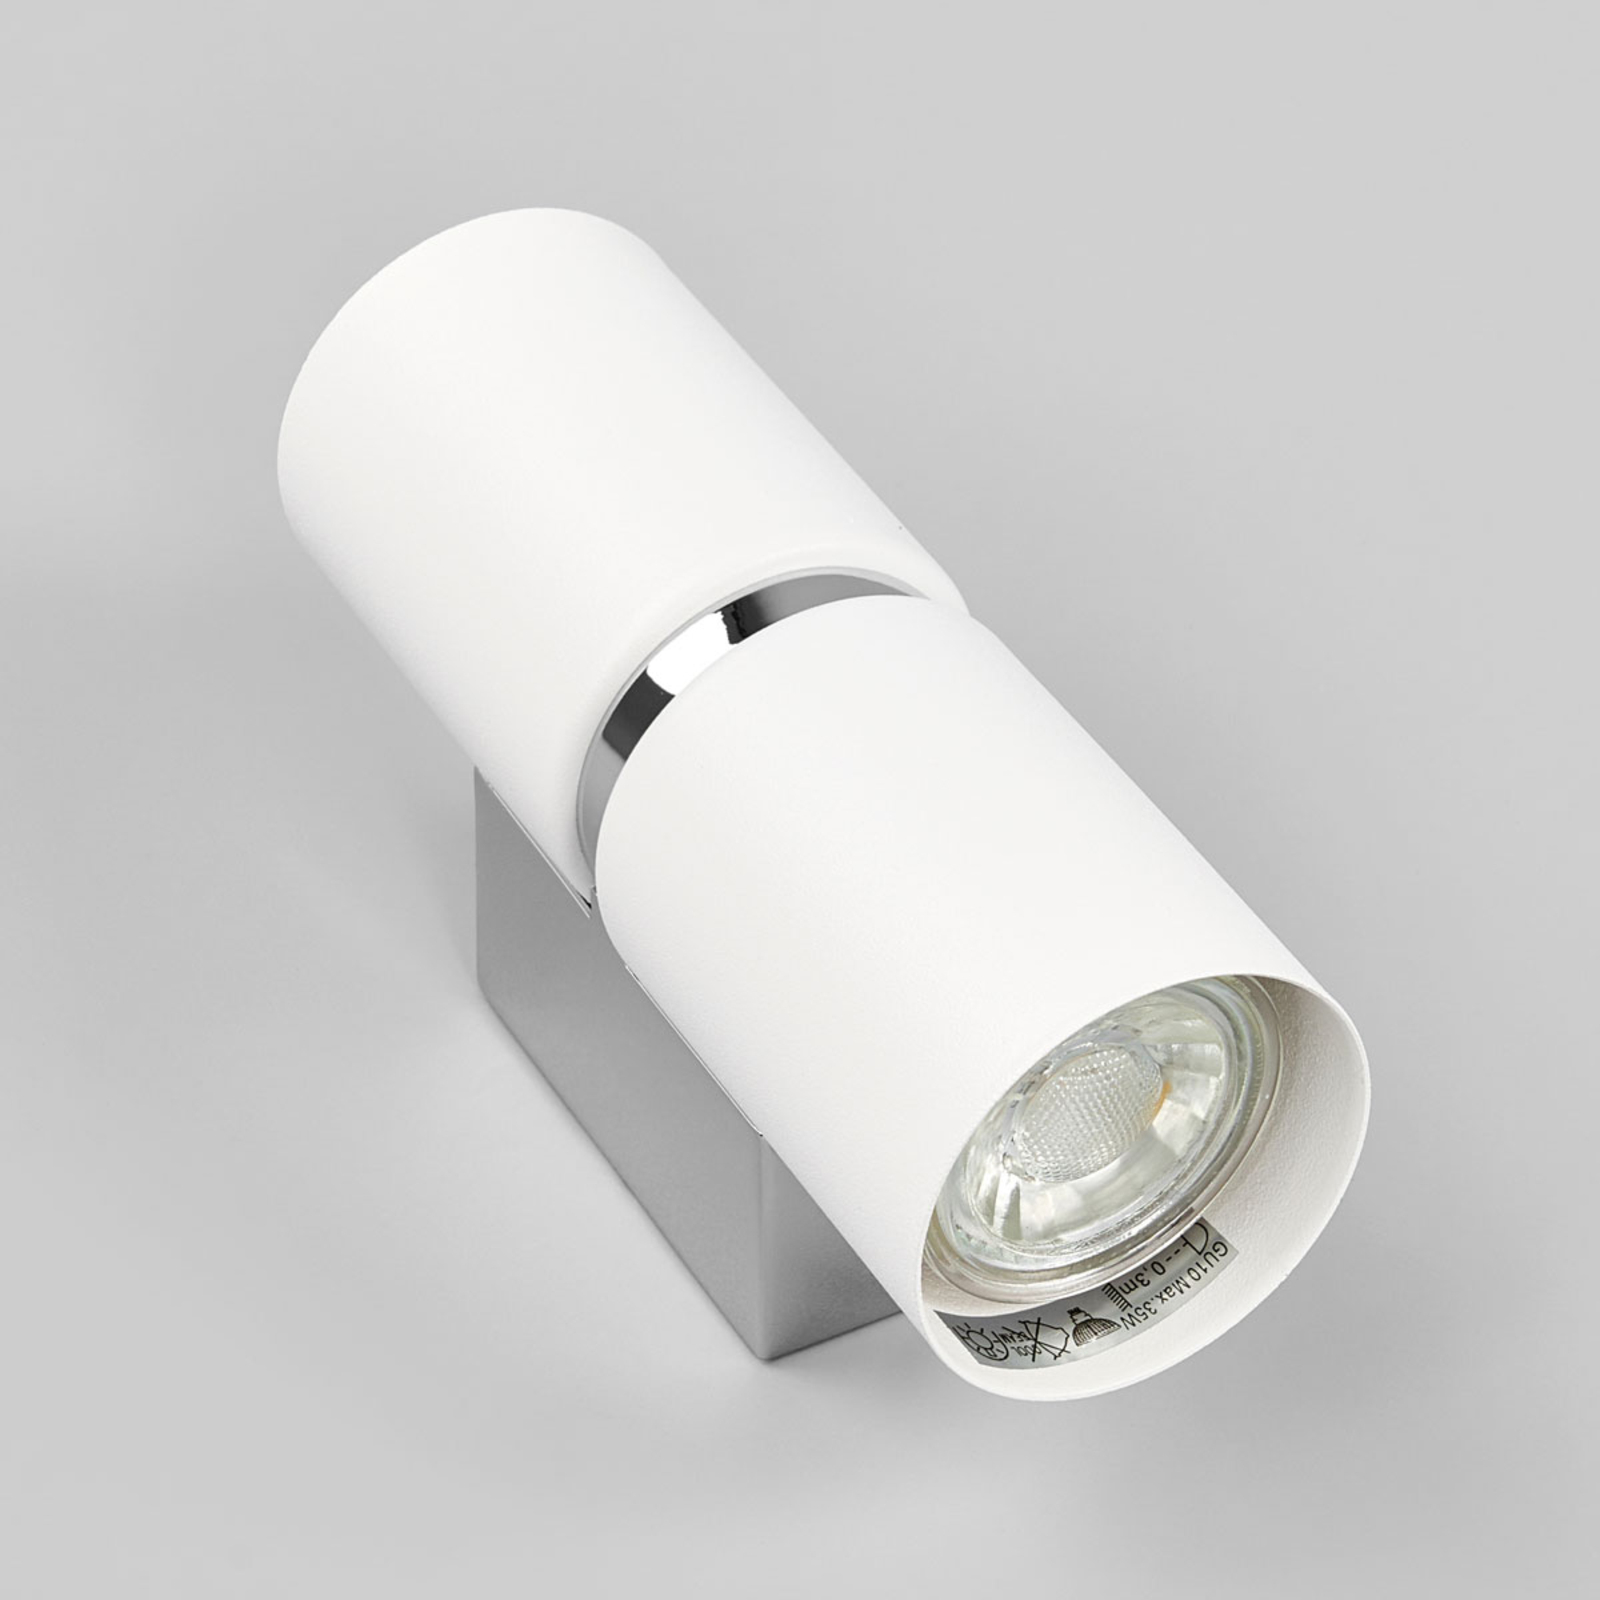 Two-bulb LED wall light Passa, round, white